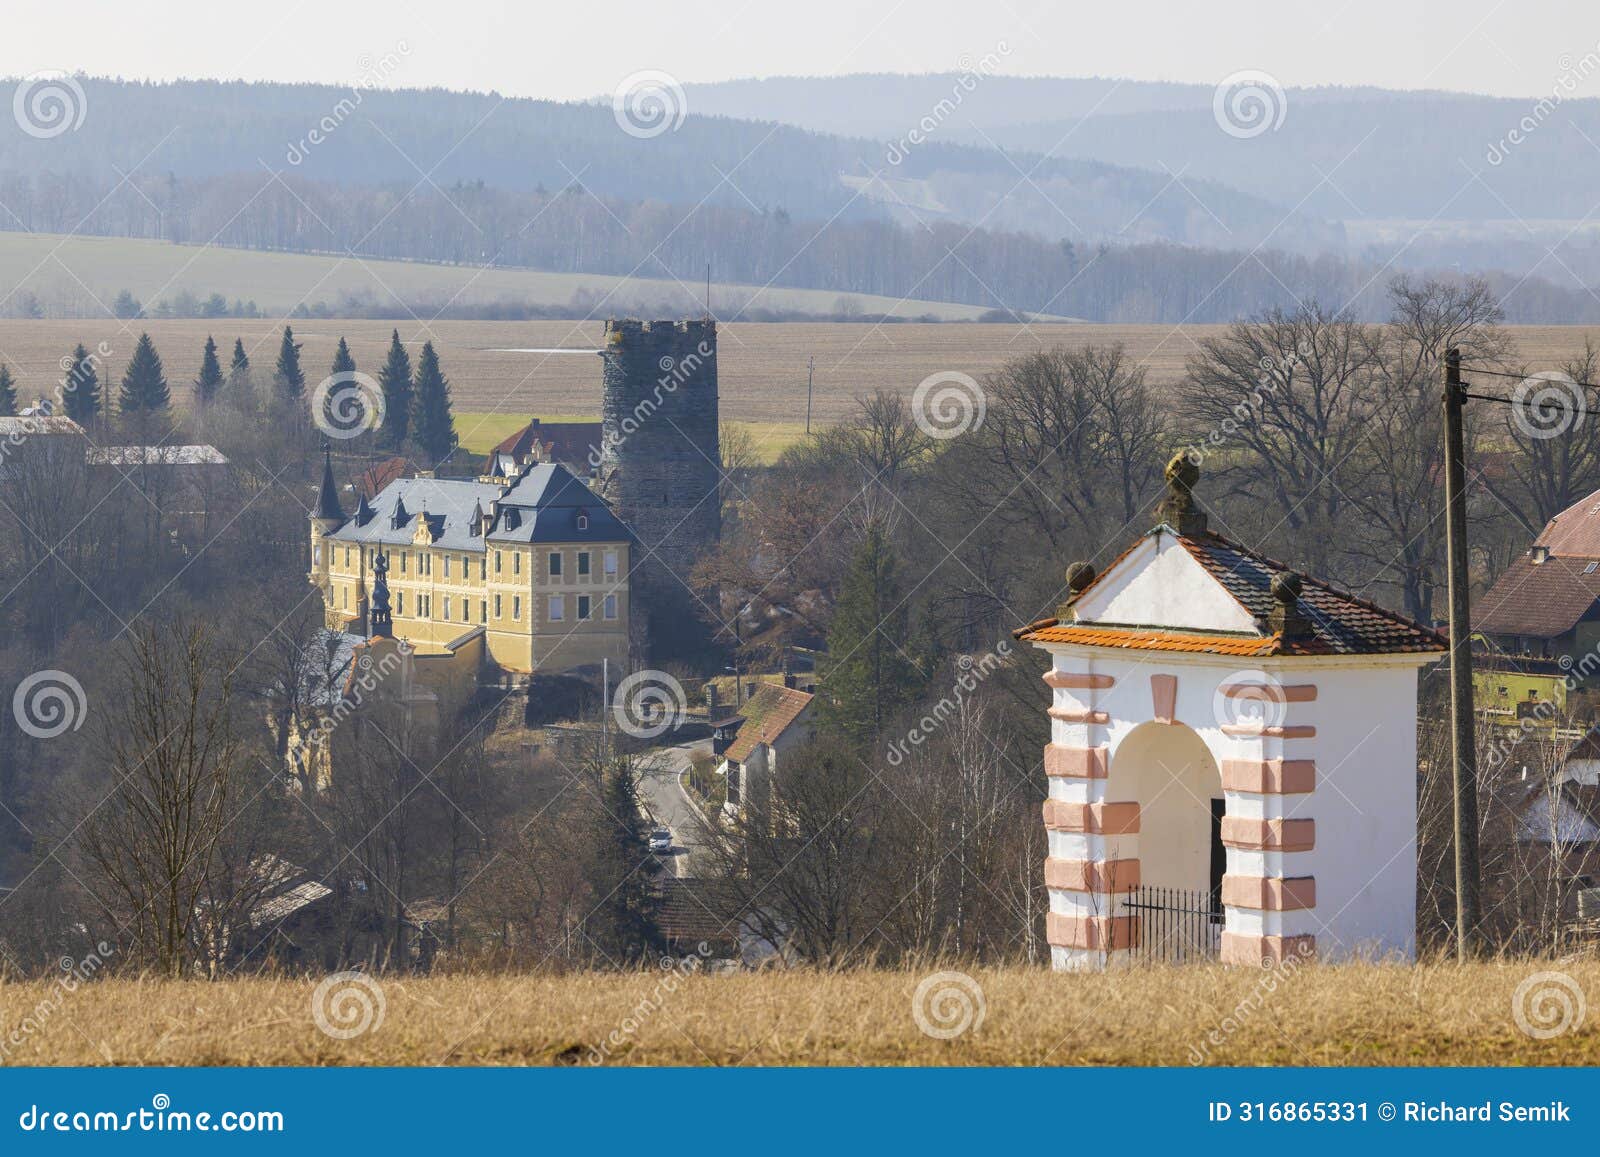 stary hroznatov castle near cheb, western bohemia, czech republic